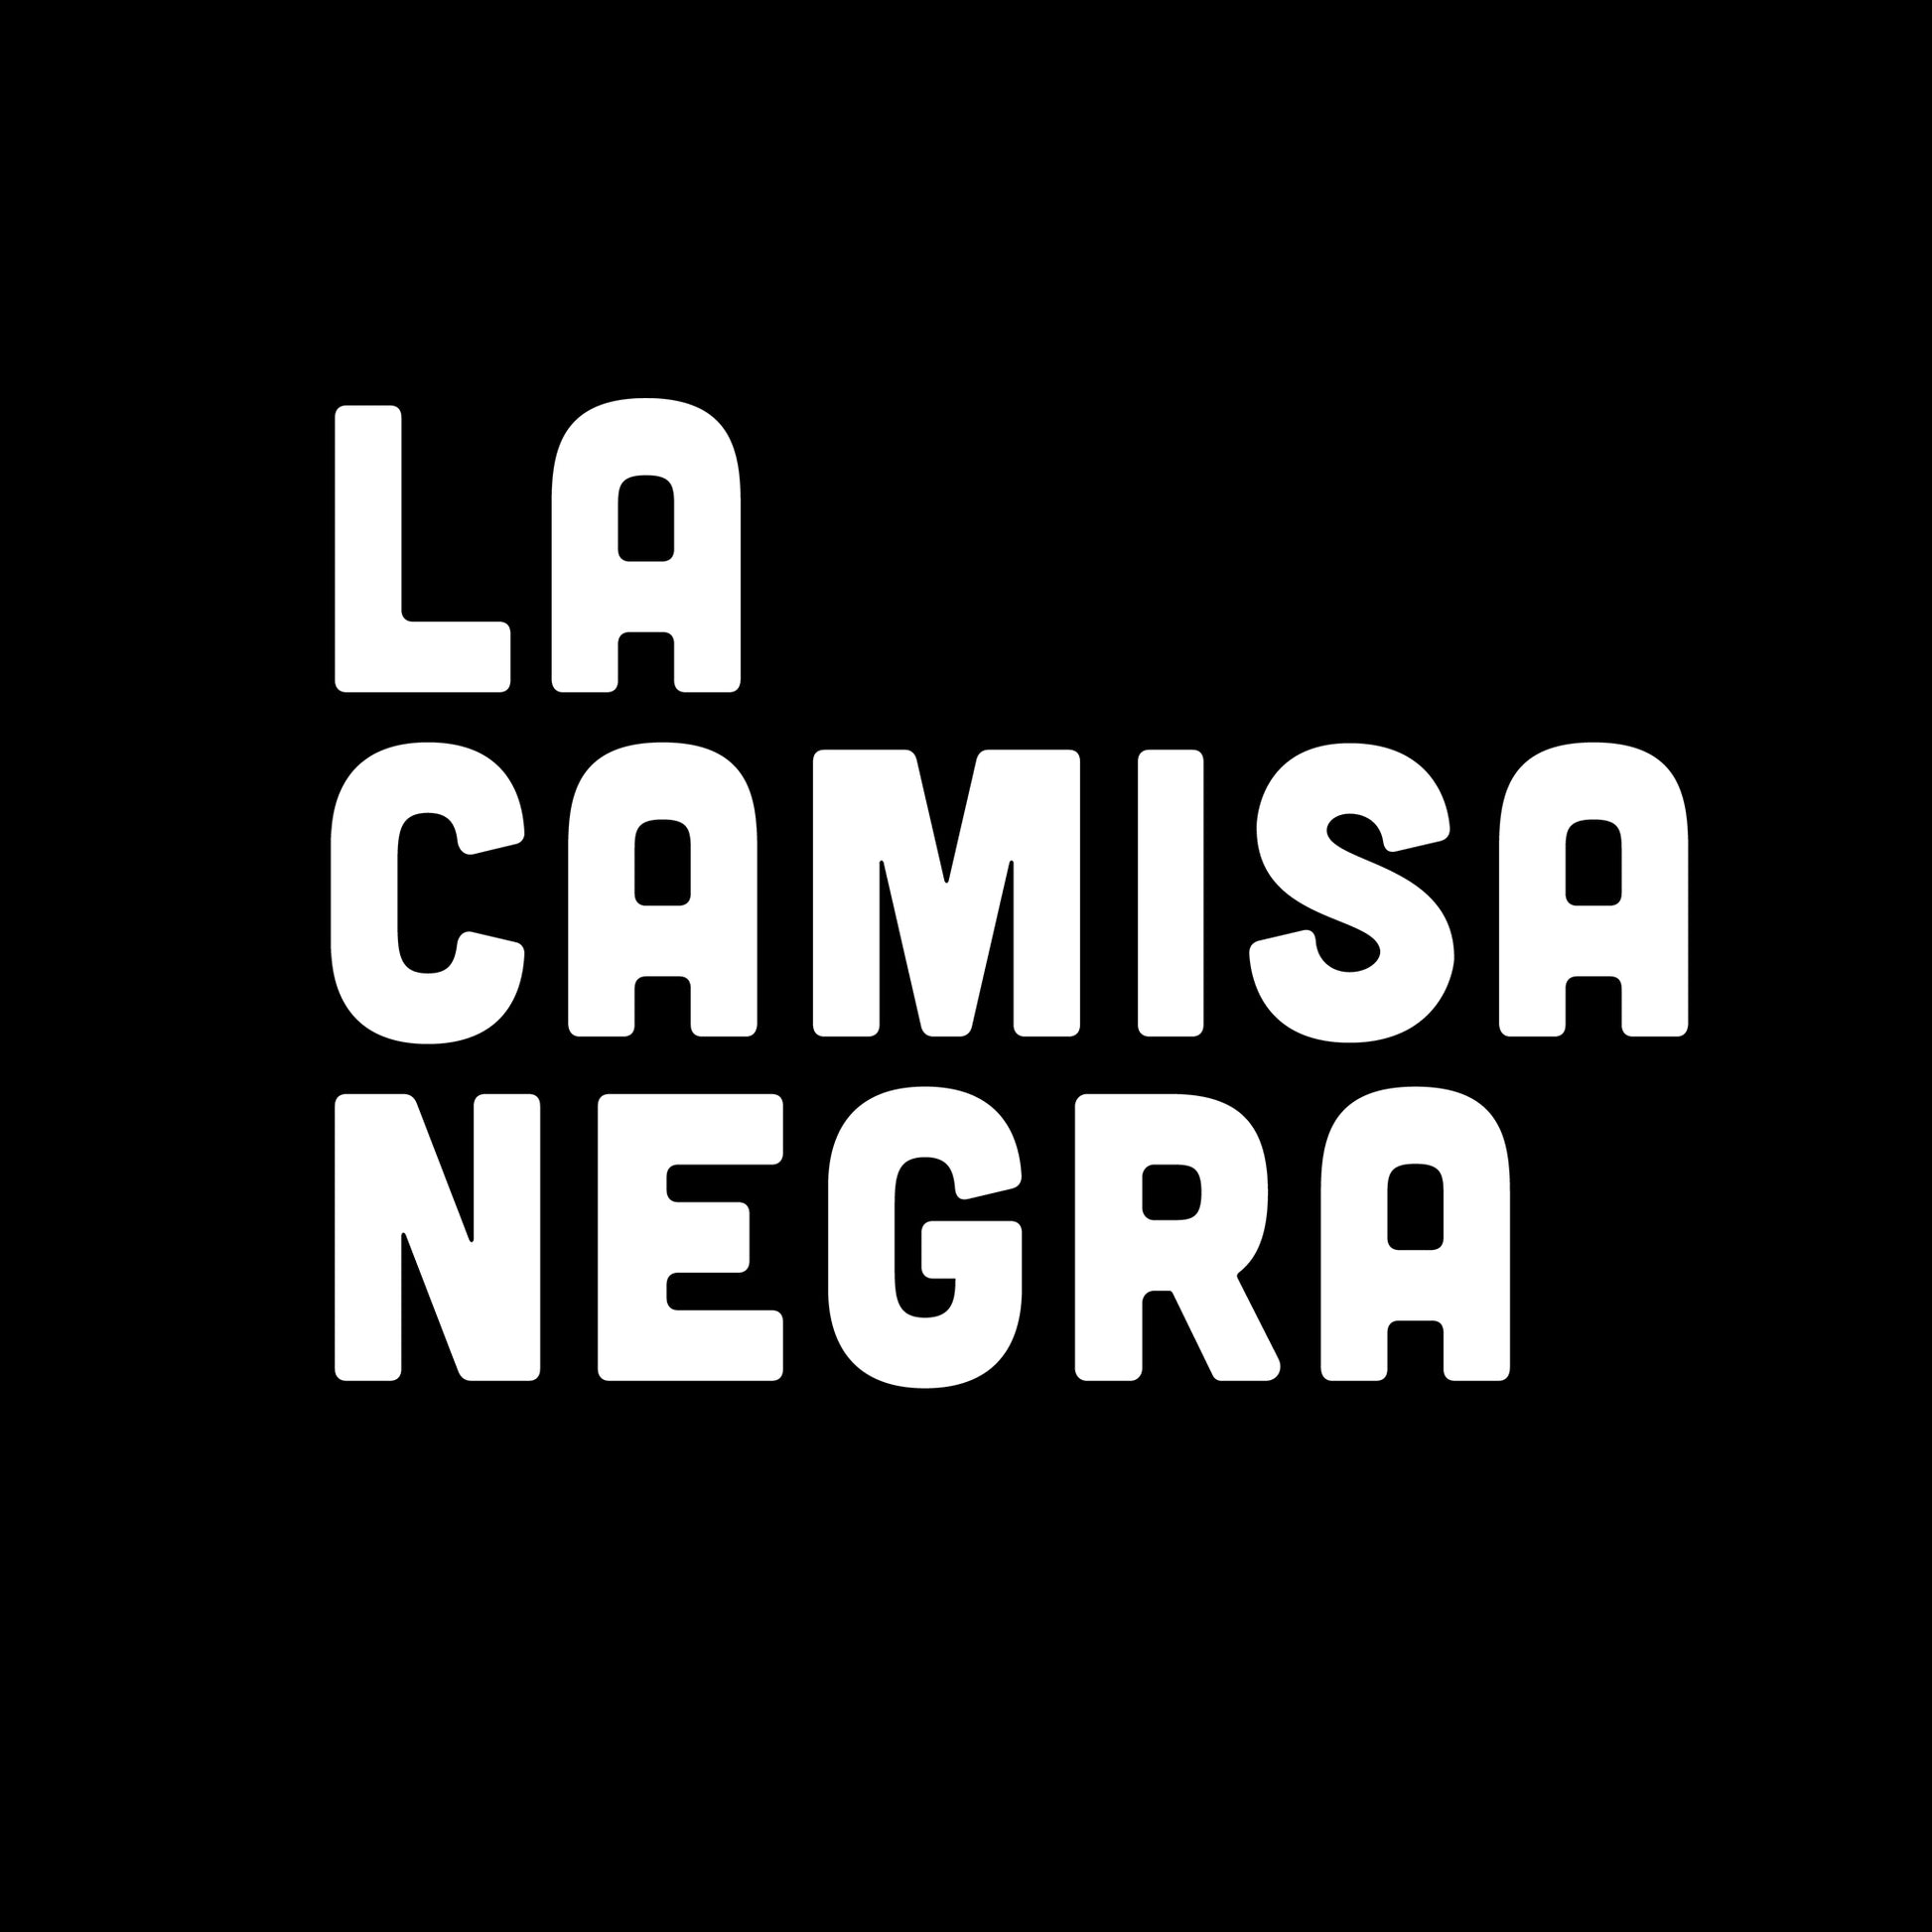  Tengo la Camisa Negra  Funny Spanish/Latino T-Shirt T